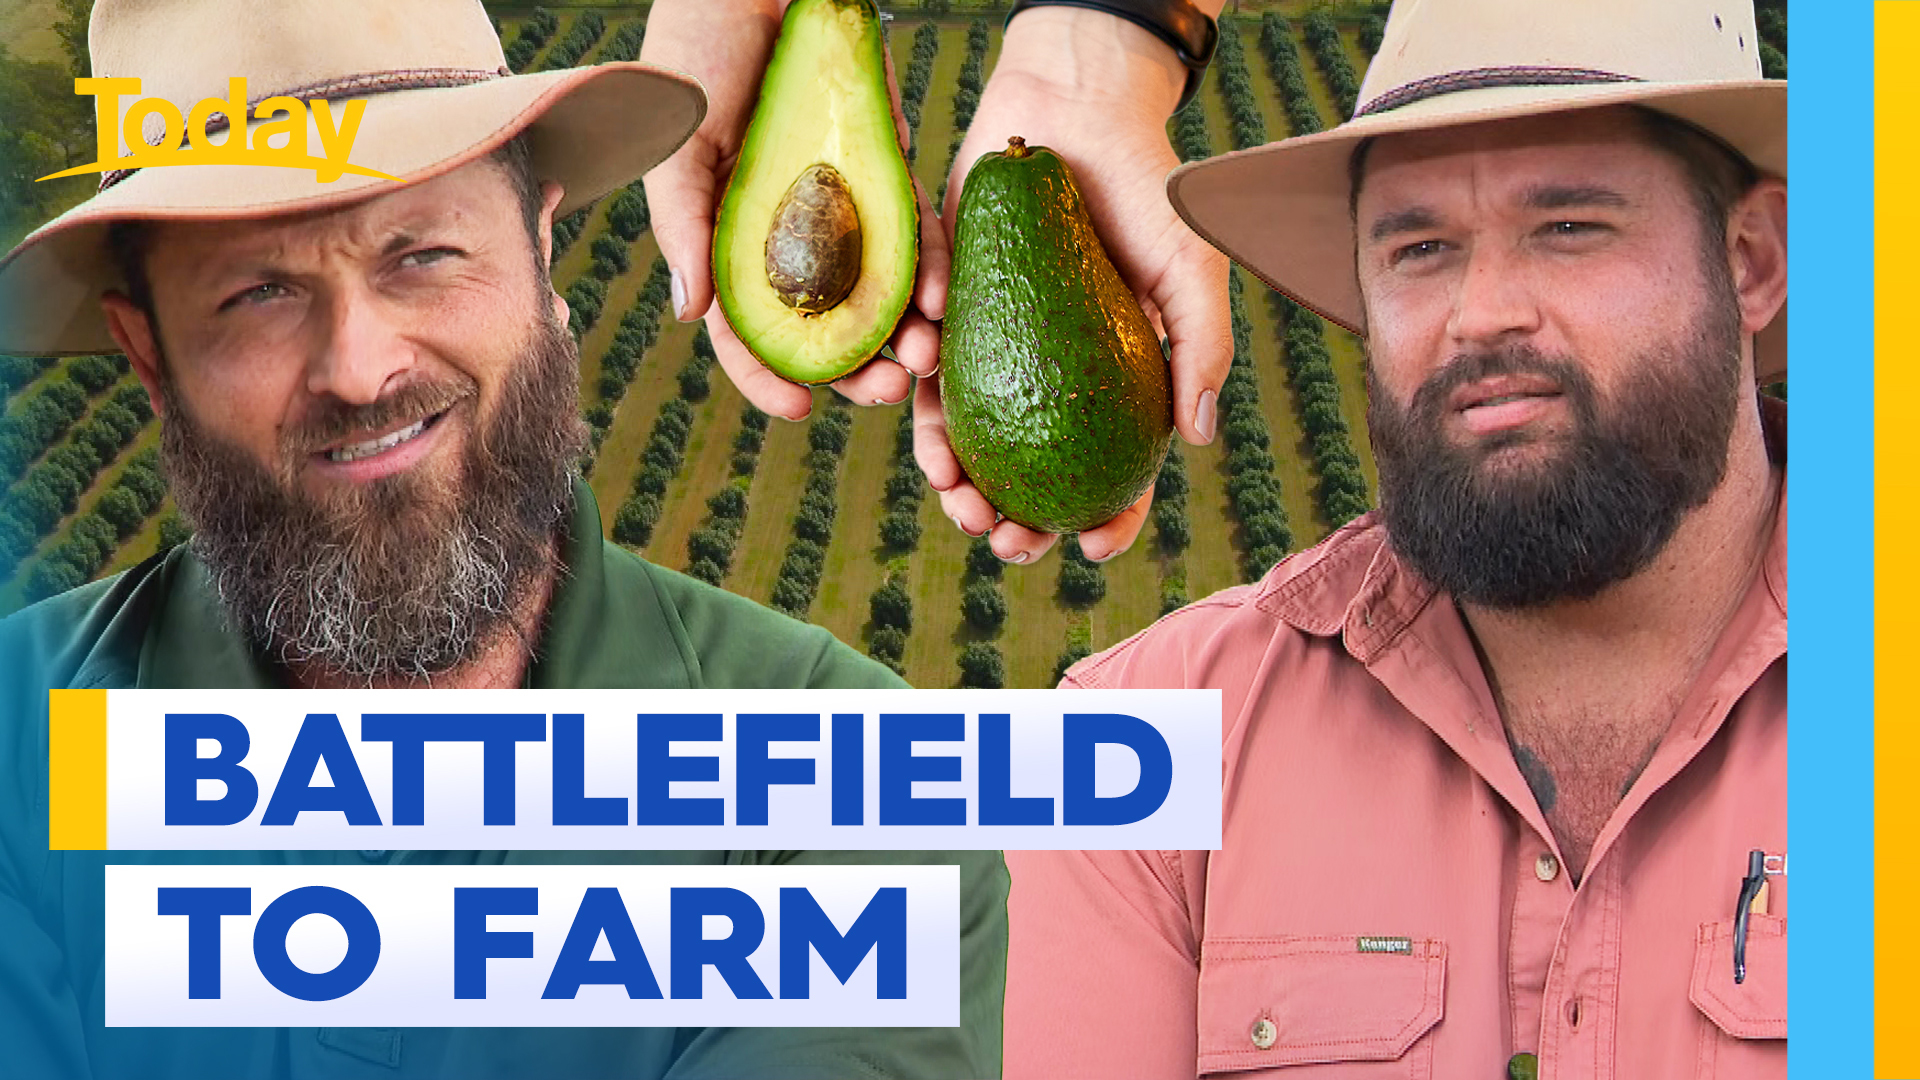 Army veterans swap their fatigues for avocado farming